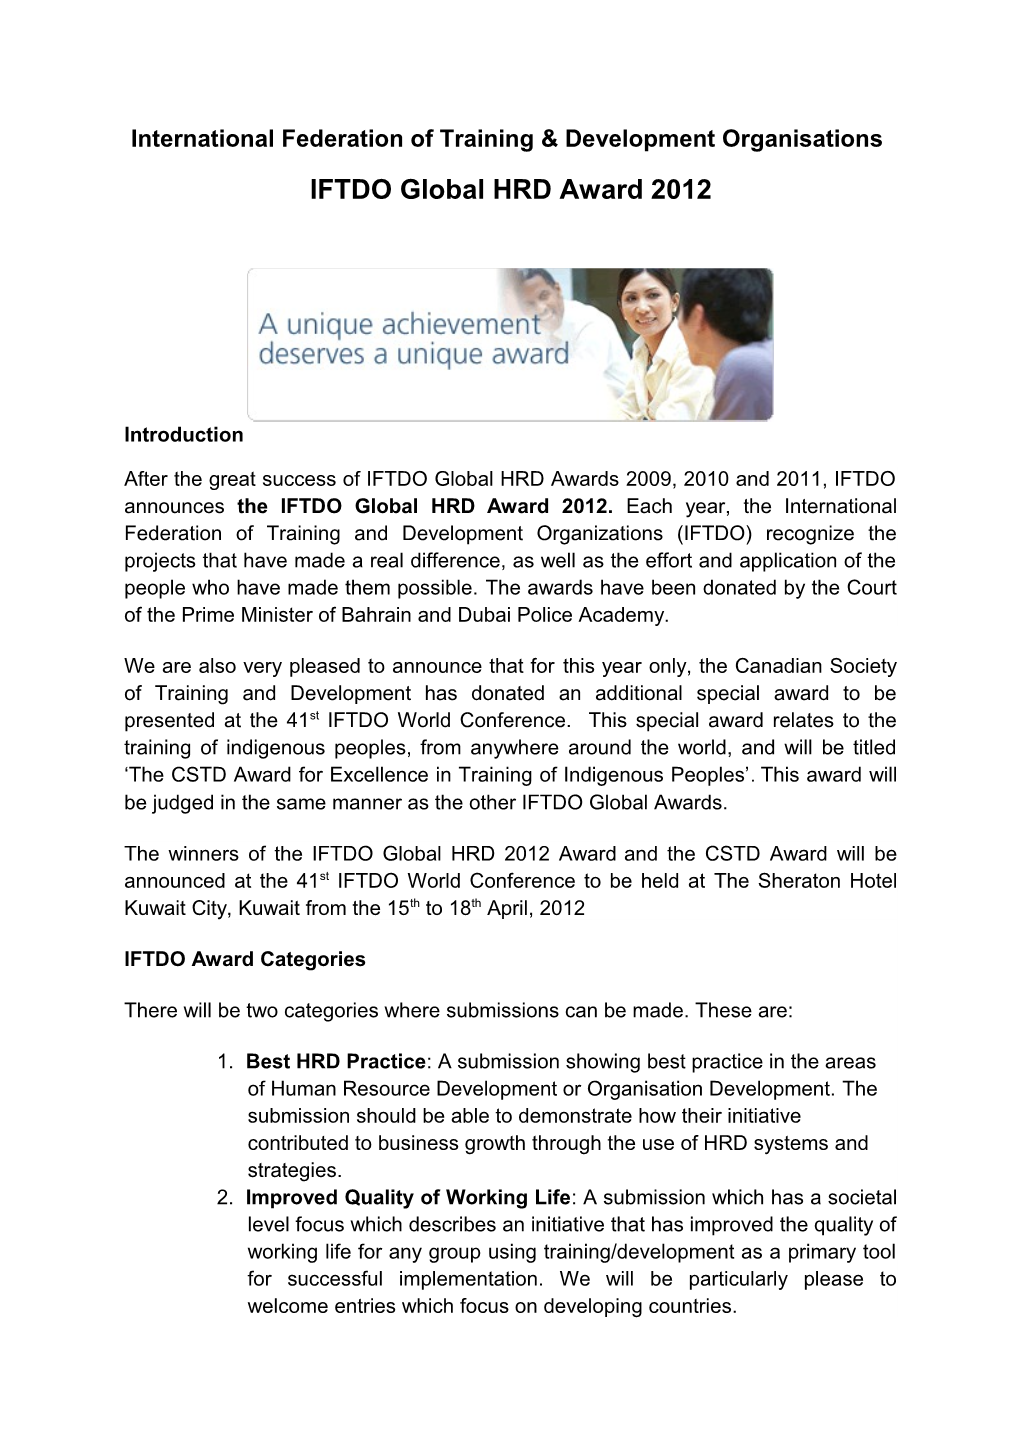 IFTDO Global HRD Award 2012